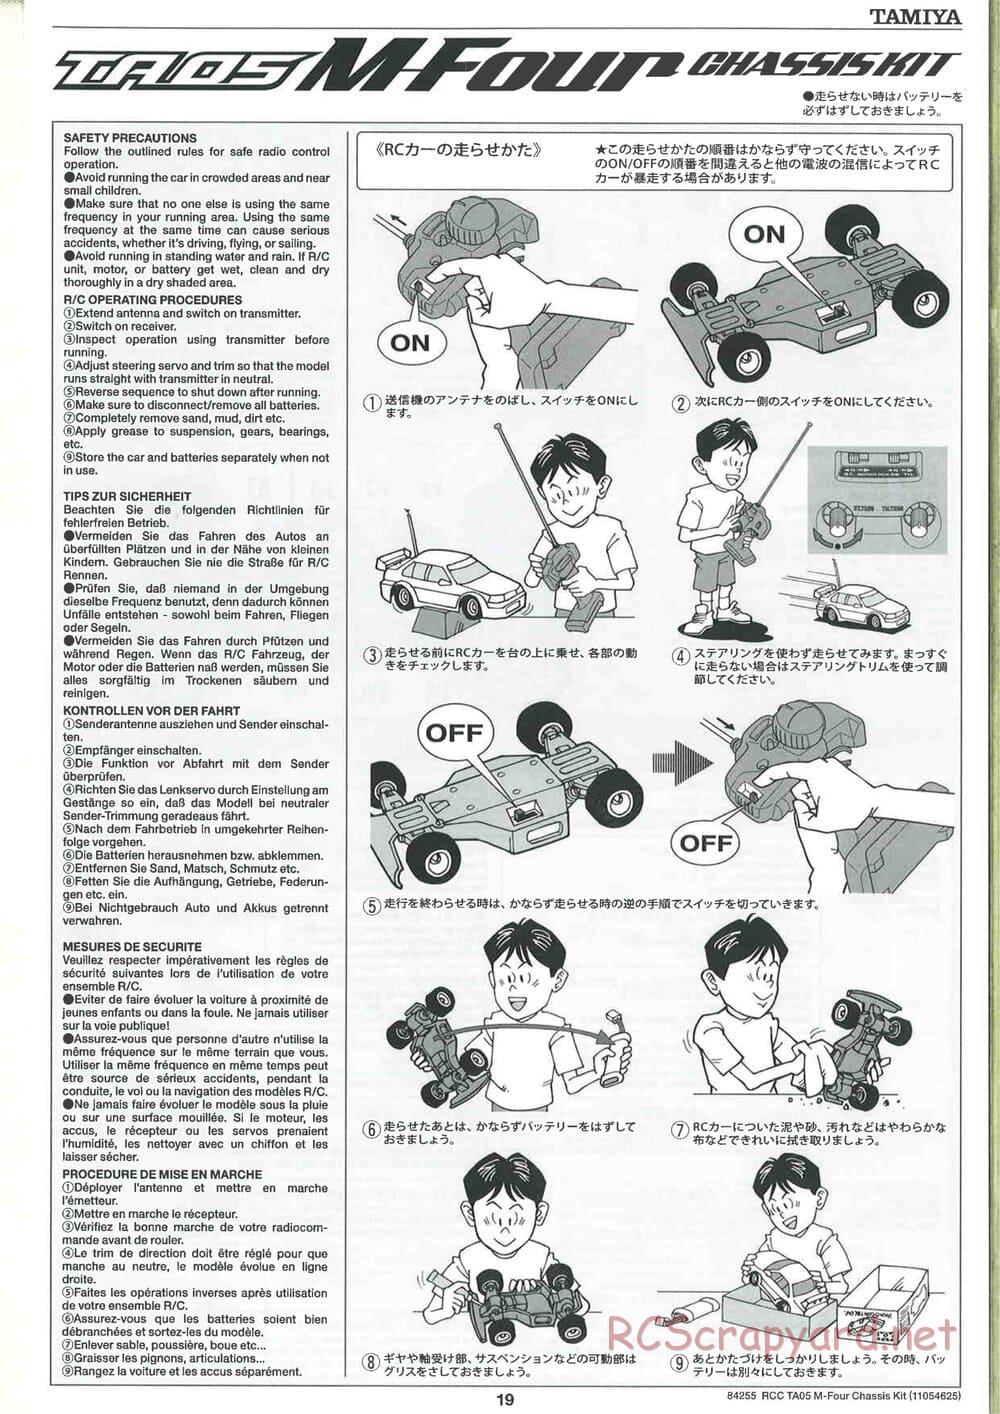 Tamiya - TA05 M-Four Chassis - Manual - Page 19